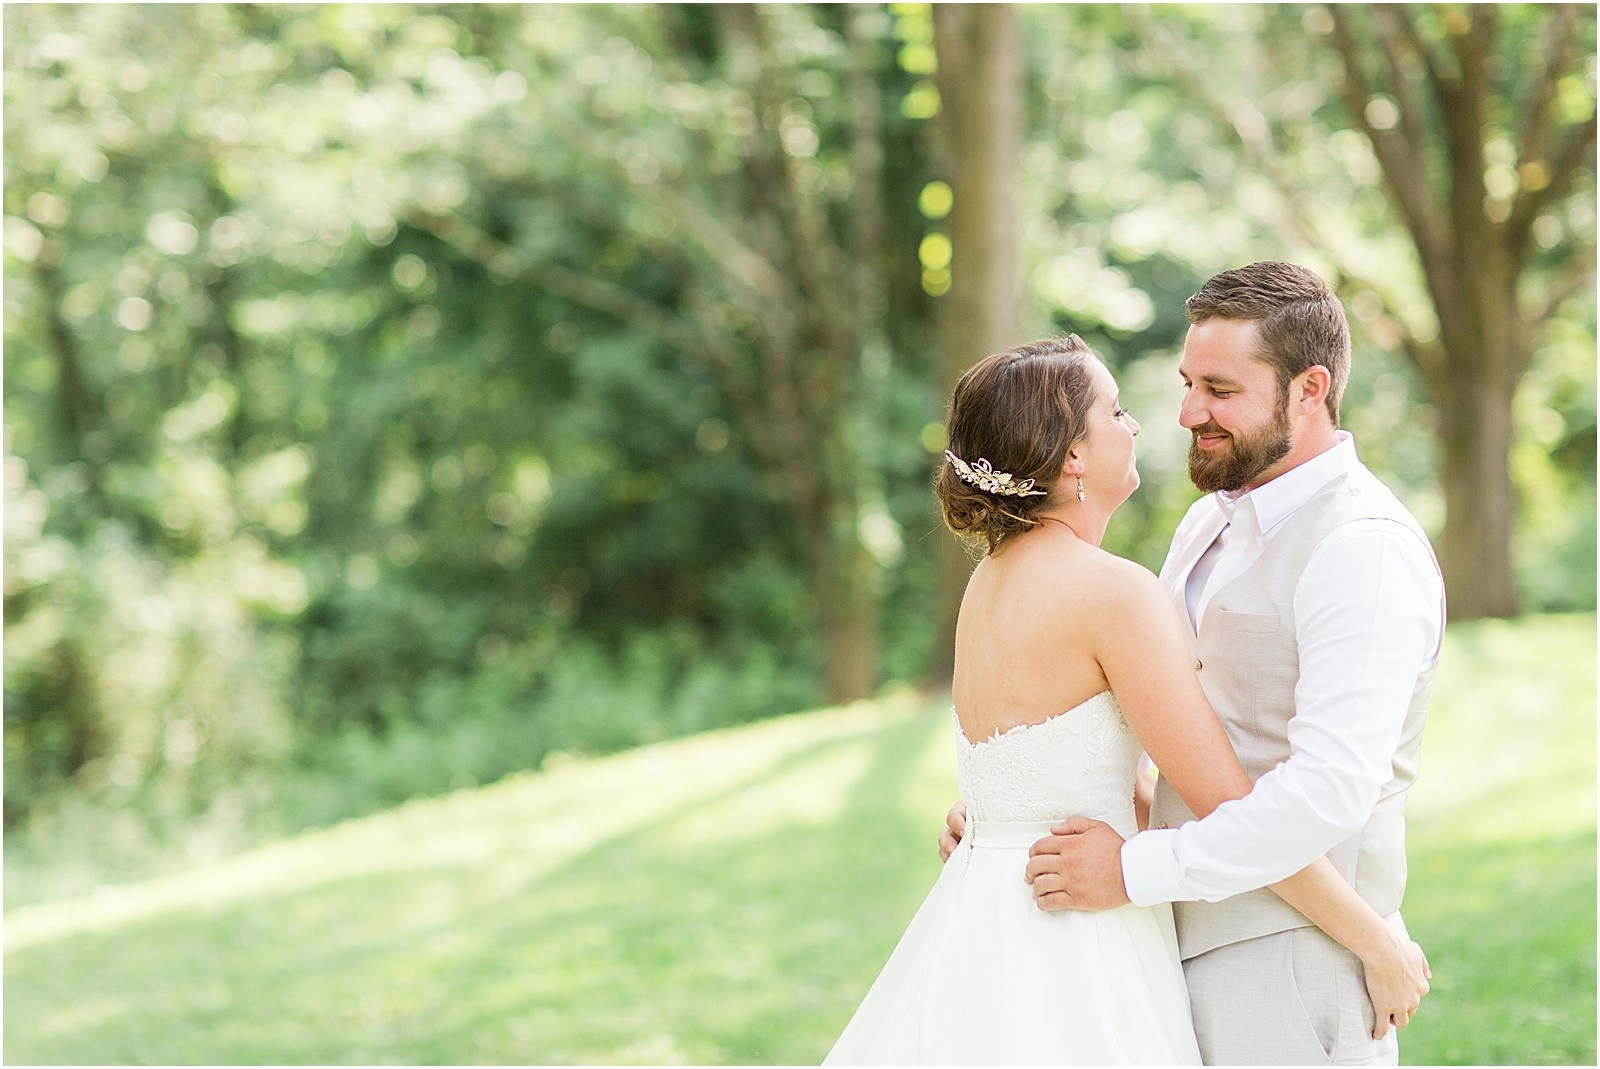 A Evansville Indiana Backyard Wedding | Bailey and Ben 025.jpg